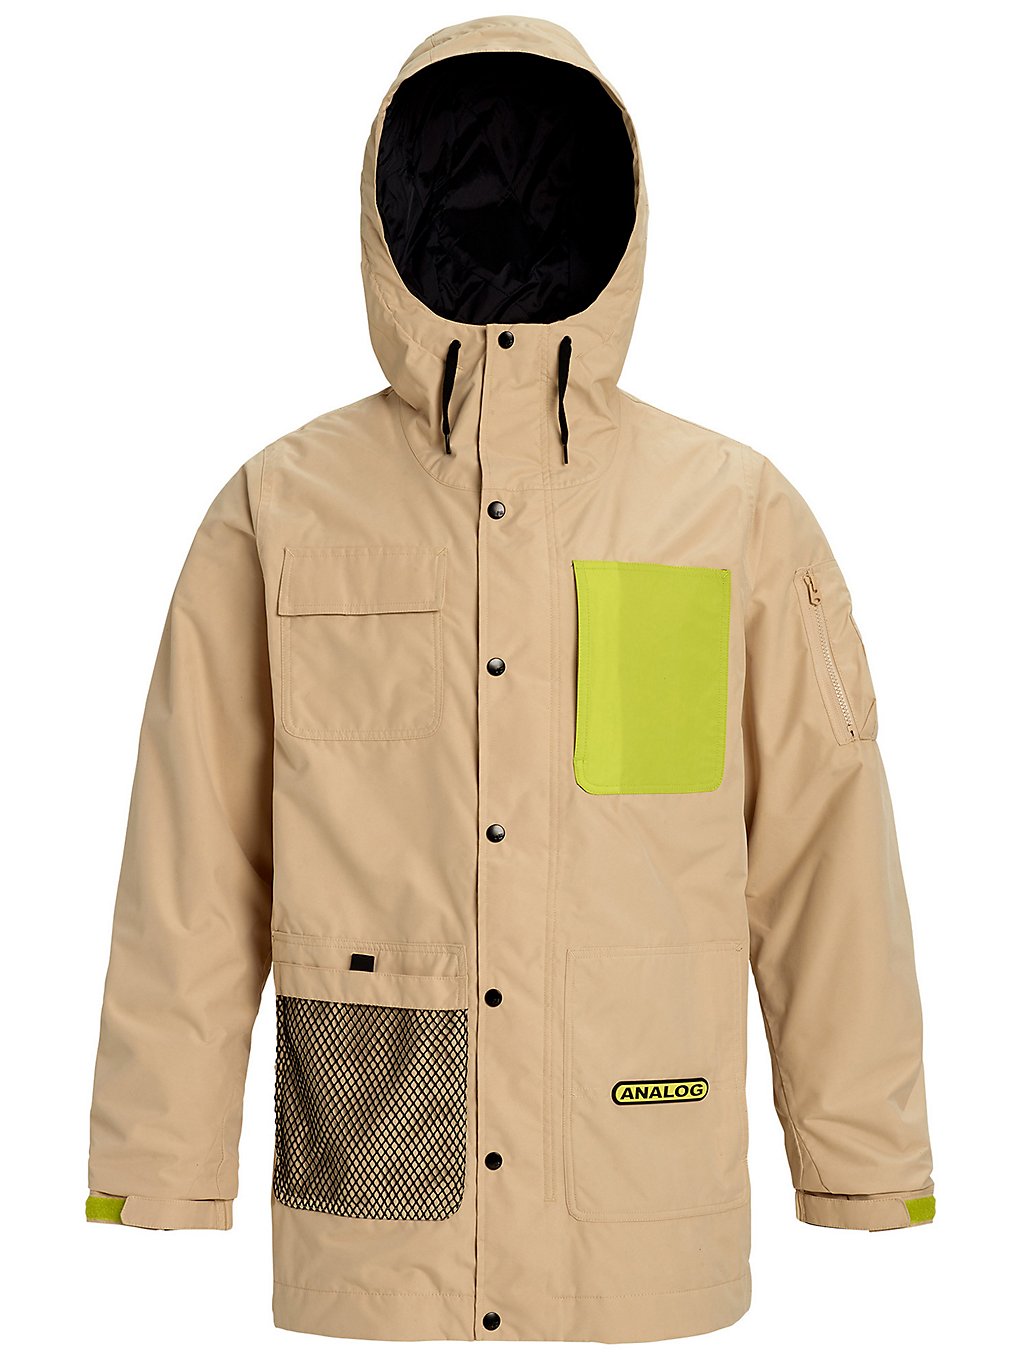 Analog solitary jacket vihreä, analog